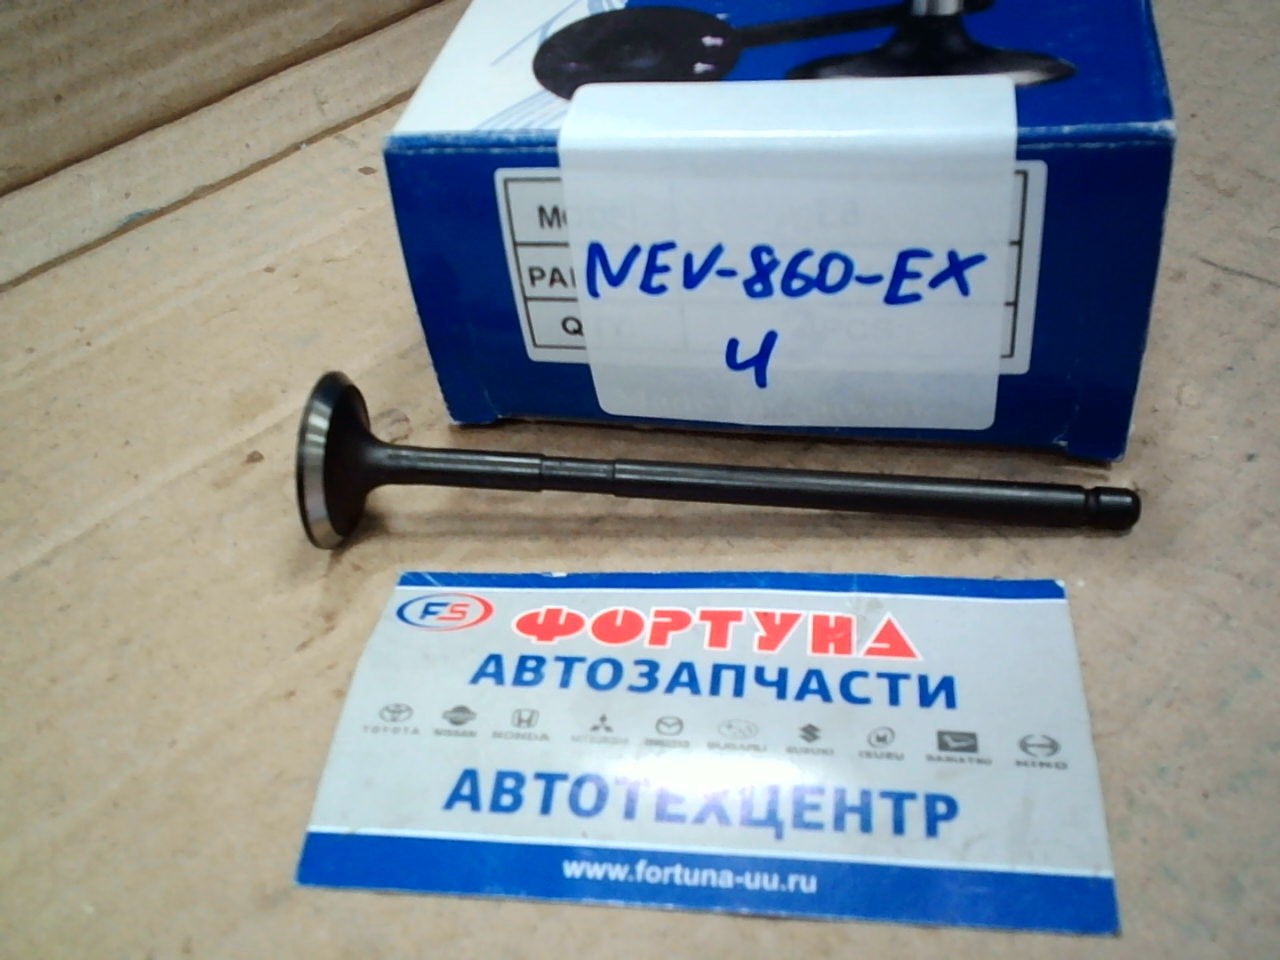 Клапан 4GR-FSE EX [13715-31102] NEV-860-EX NIPPON MOTORS на  